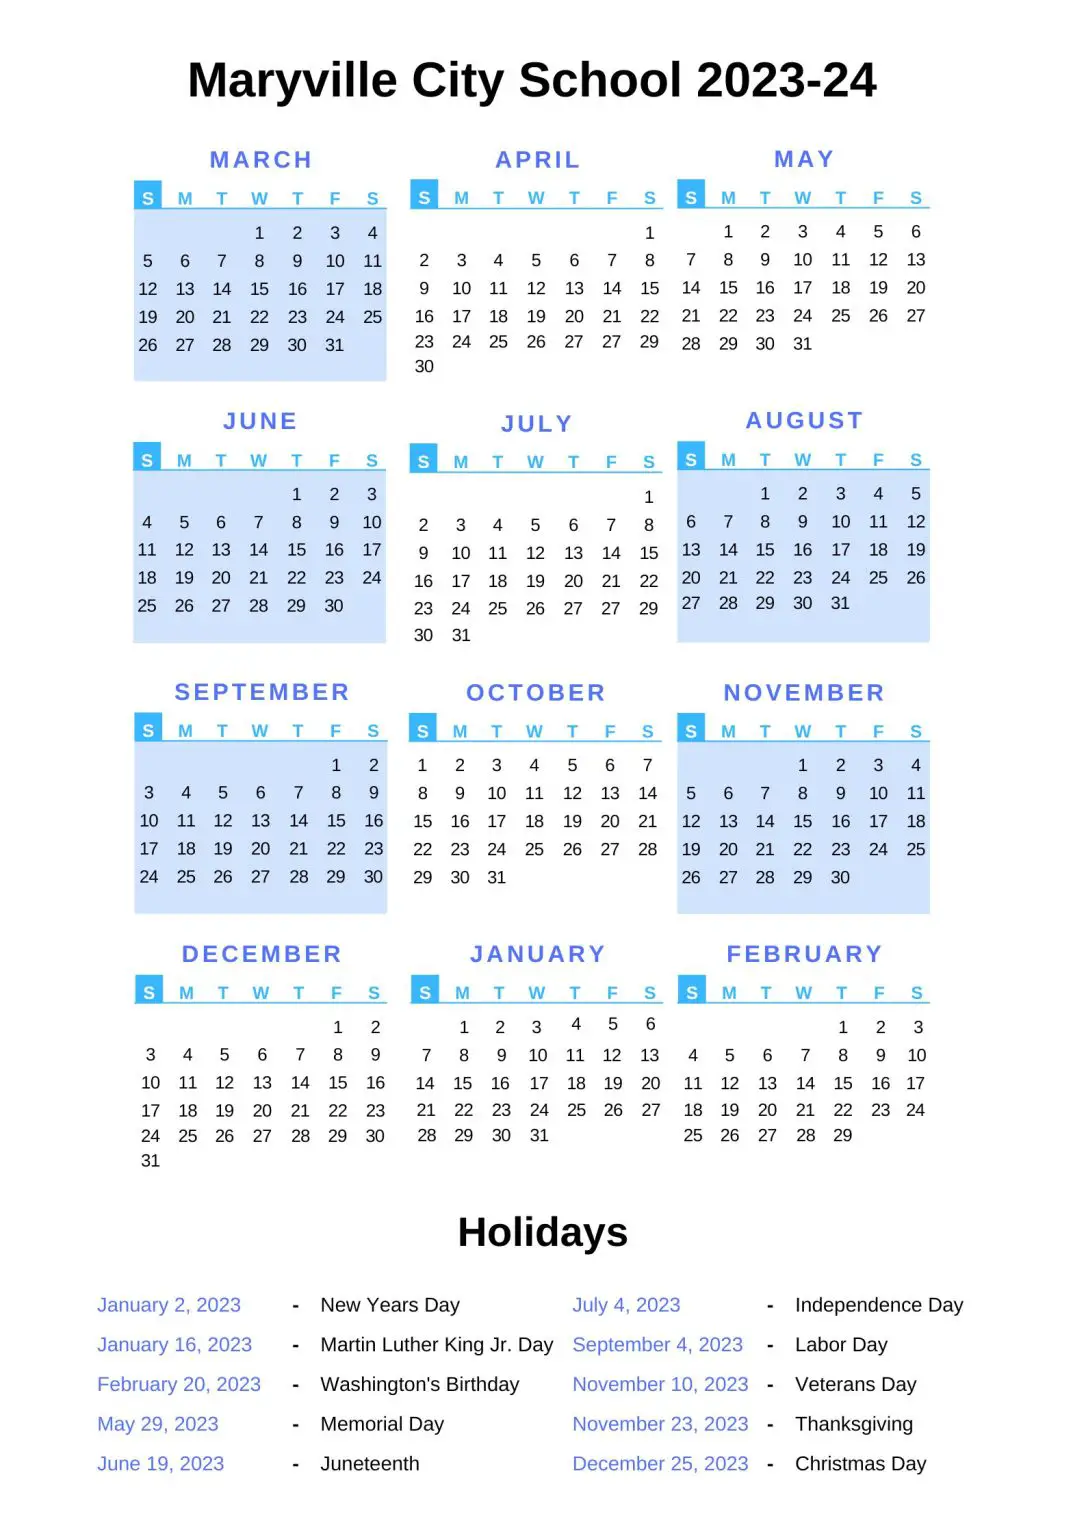 maryville-city-schools-calendar-2023-24-with-holidays